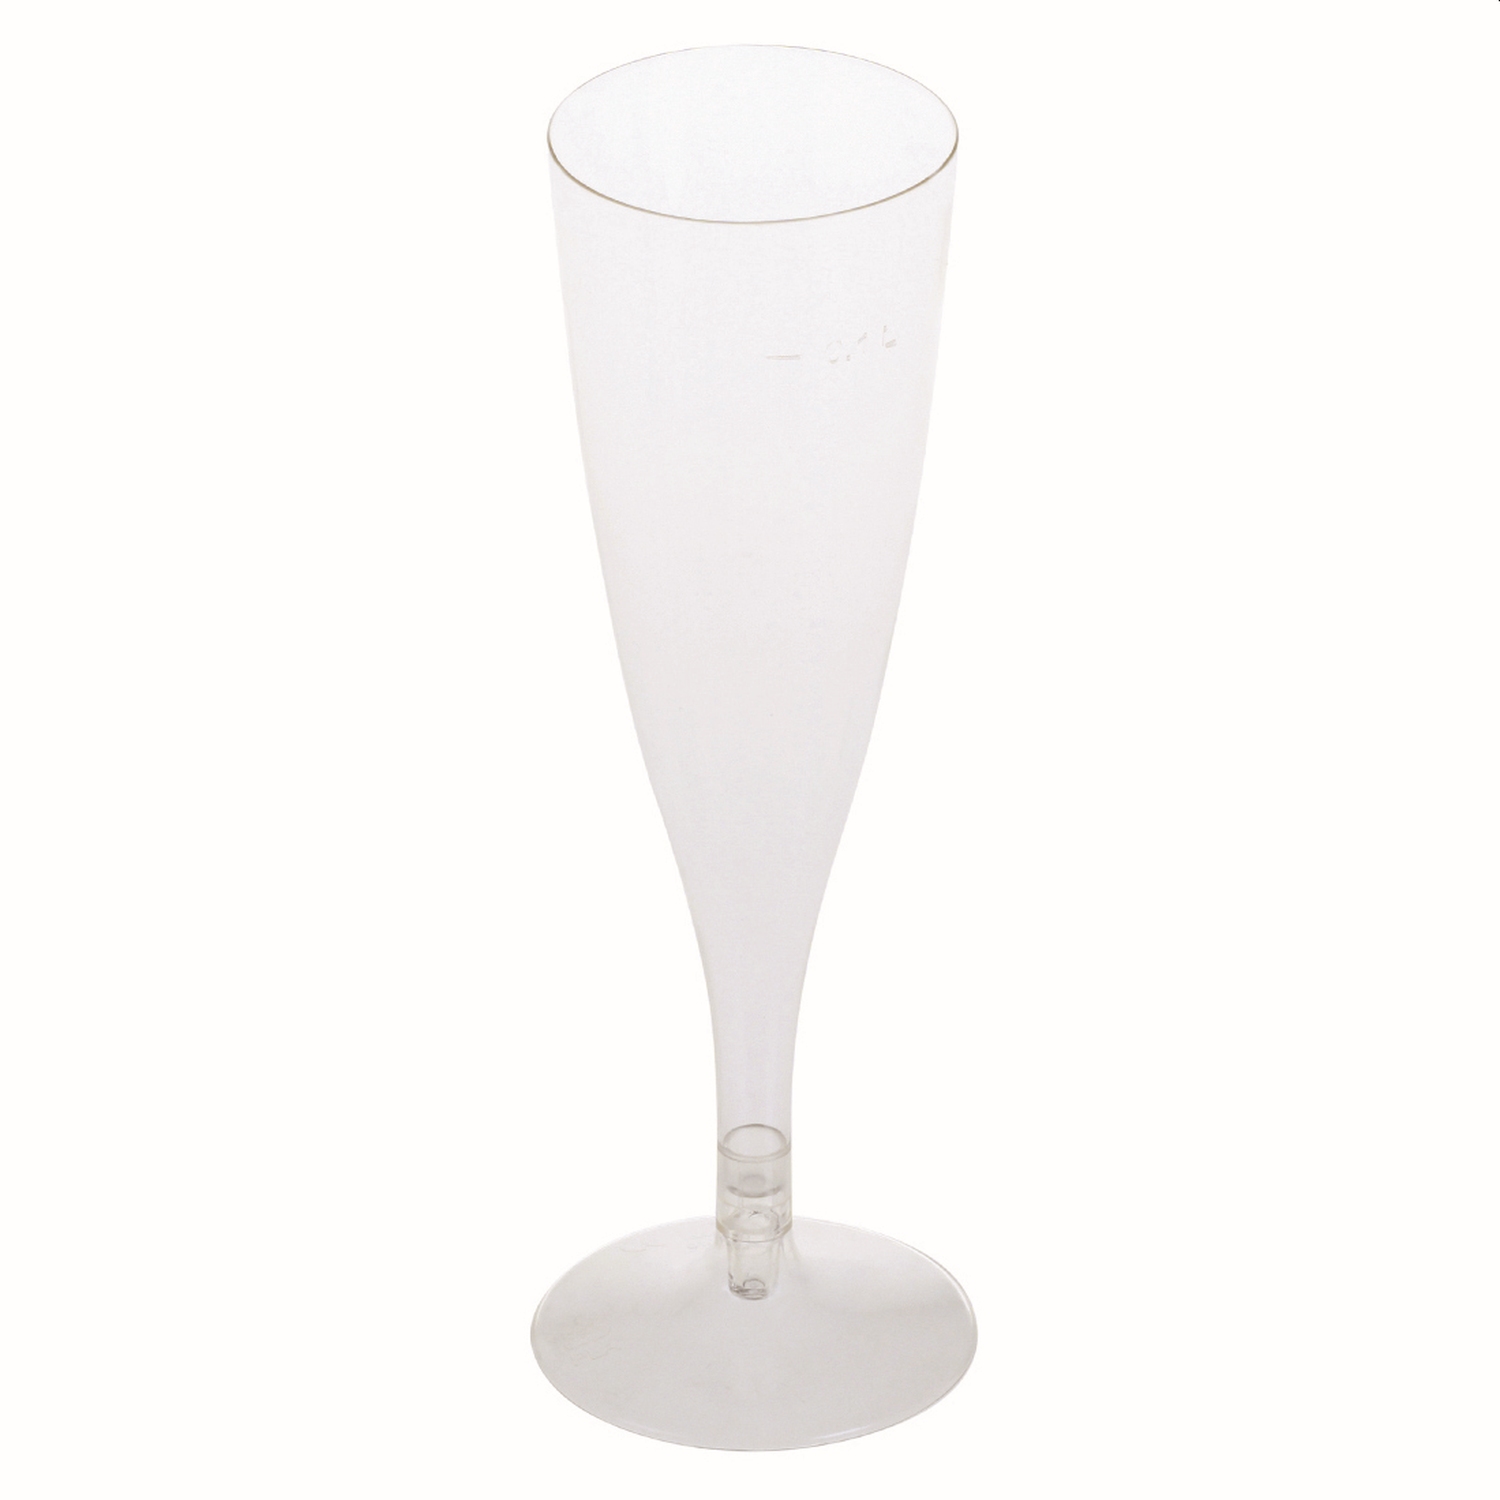 BIO Sektglas klar 2-teilig 100 ml 5,3x15+3 cm aus Biokunststoff (PLA) 27 Stk.